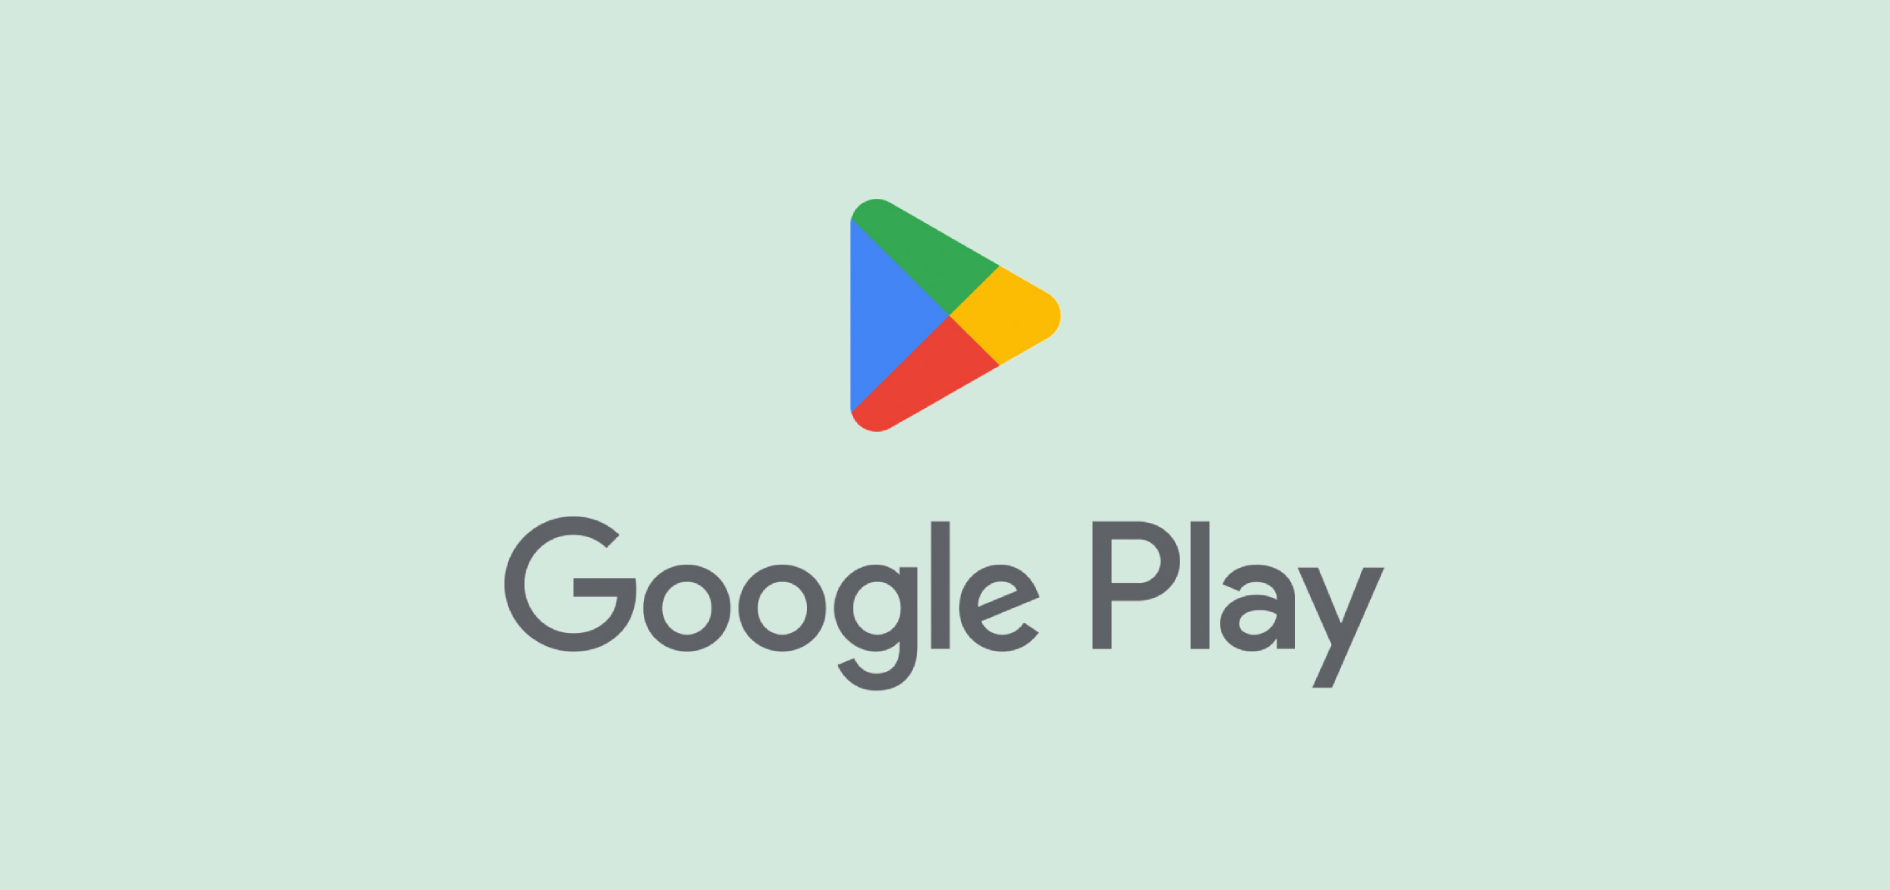 Google play закрывают. Google Play. Значок Google Play. Google Play Market лого. Иконка Google Play без фона.